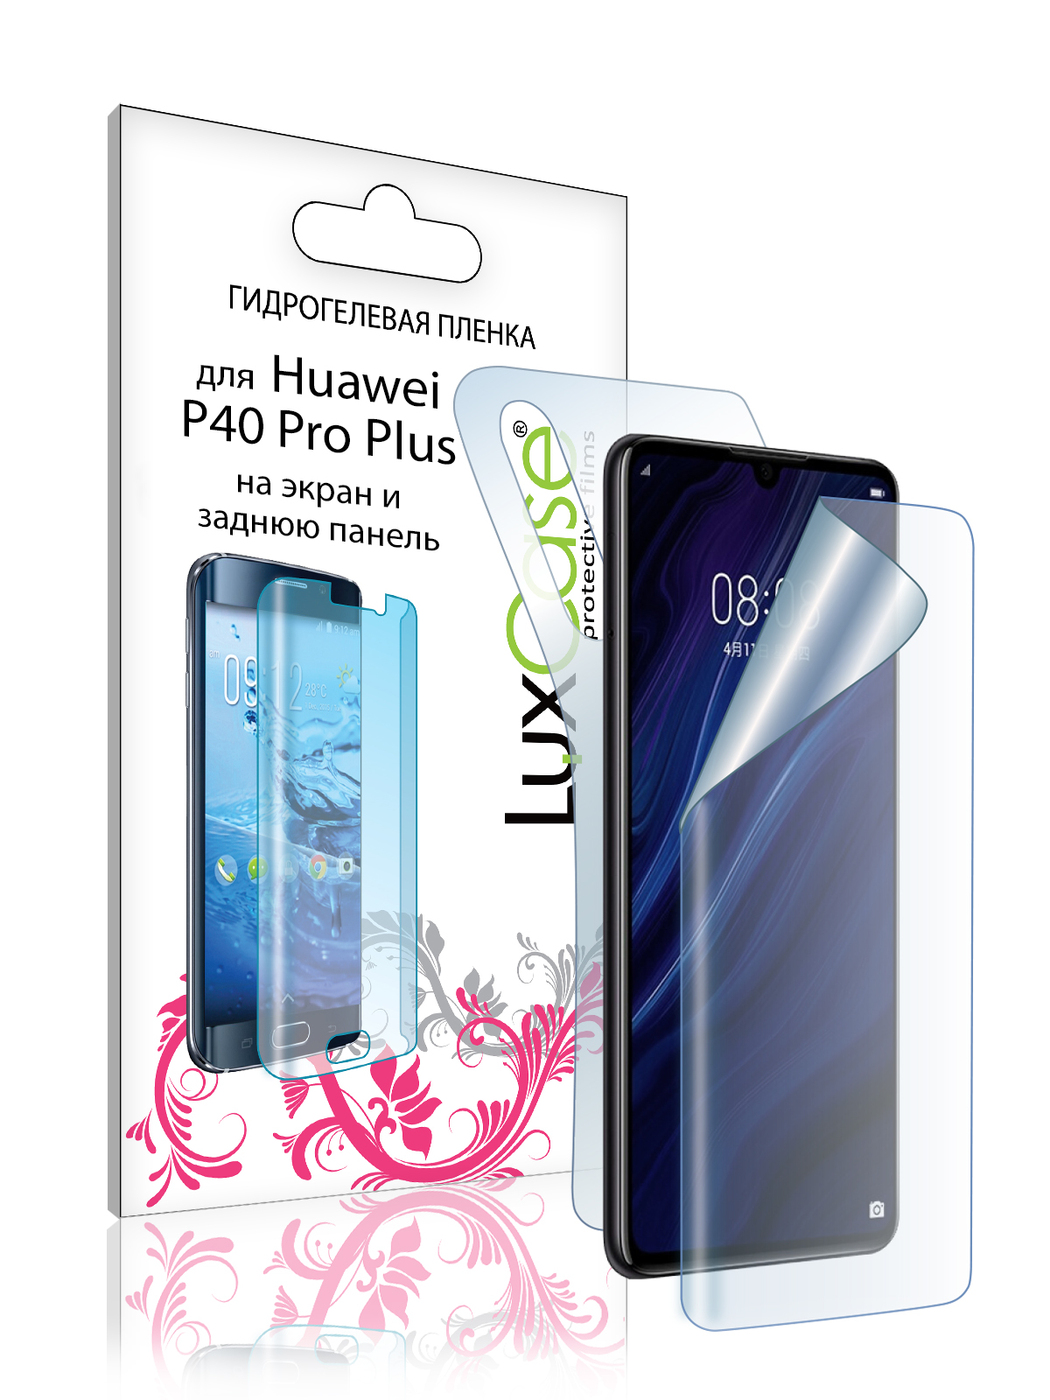 Защитная пленка LuxCase для Huawei P40 Pro Plus Front and Back 0.14mm Transparent 86135 защитная пленка luxcase для huawei p40 back 0 14mm transparent 86029